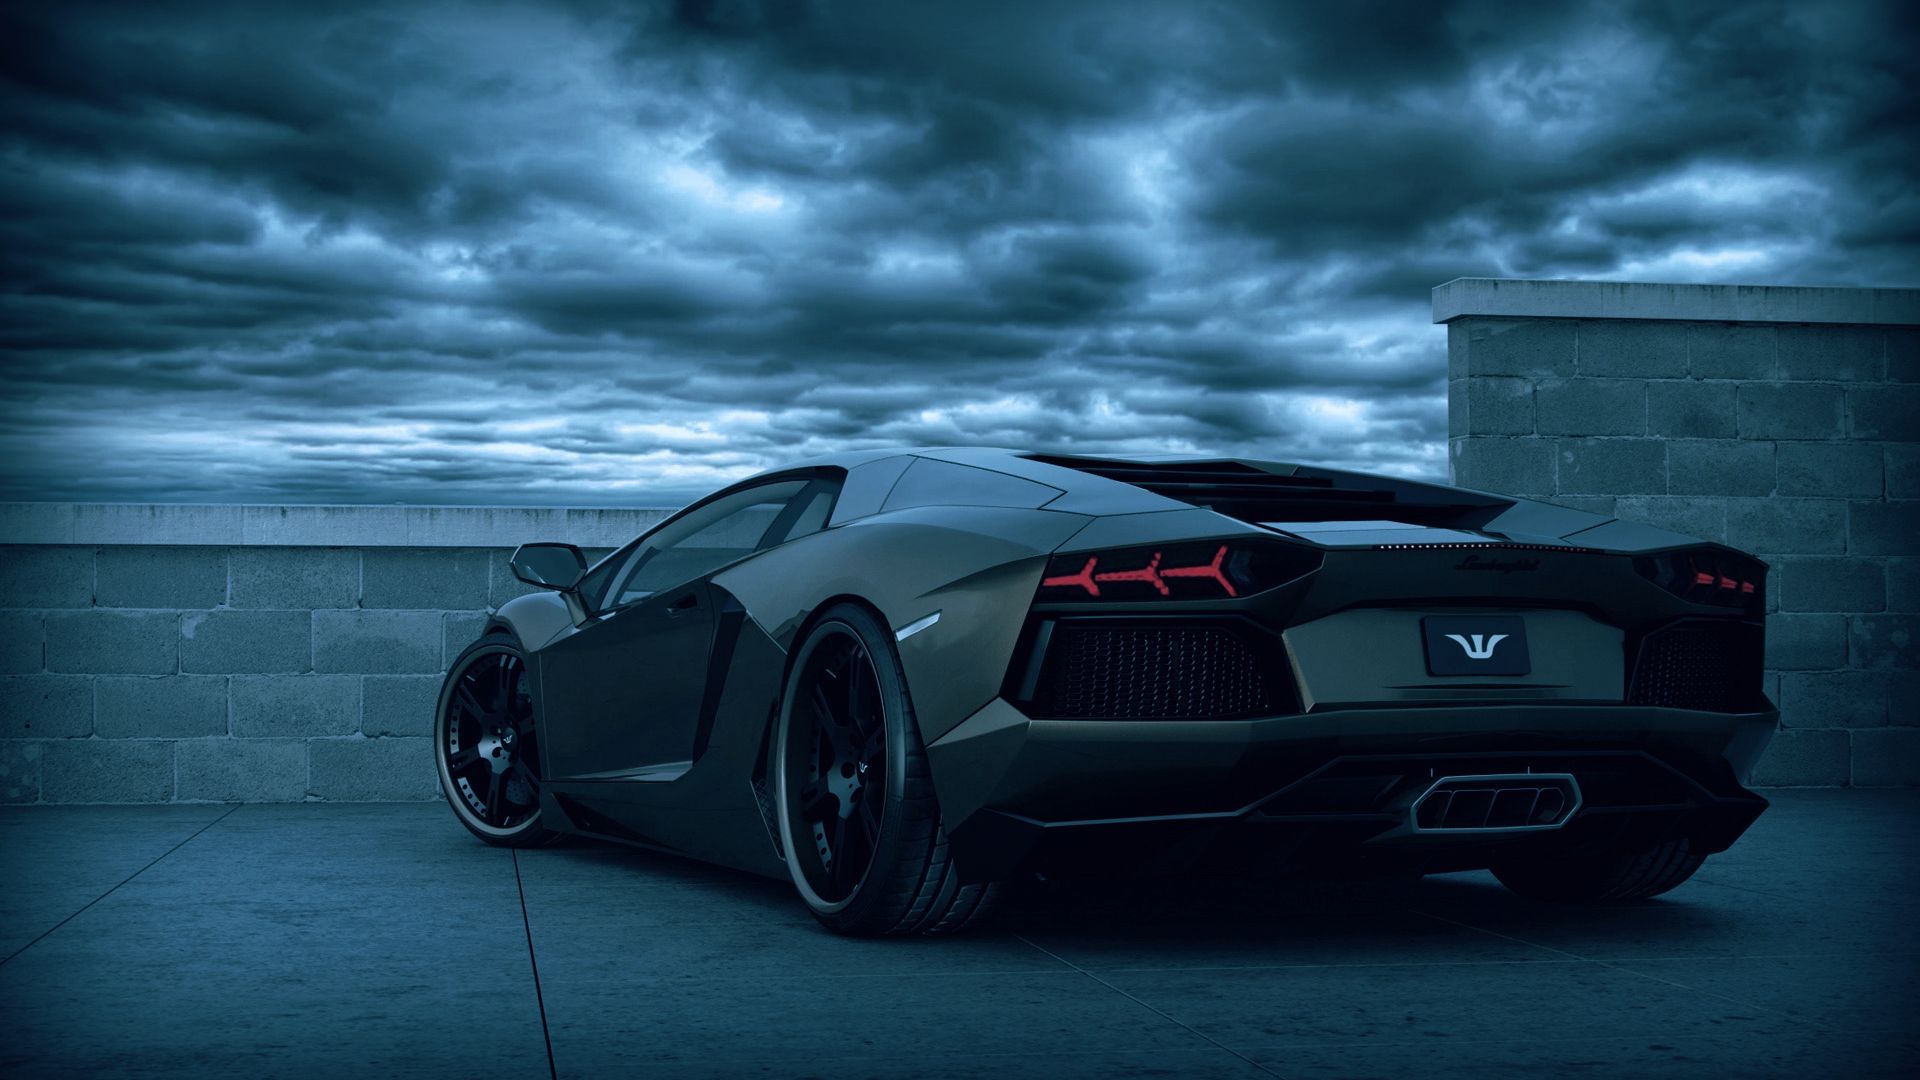 Lamborghini Dark fondos de pantalla de alta definición